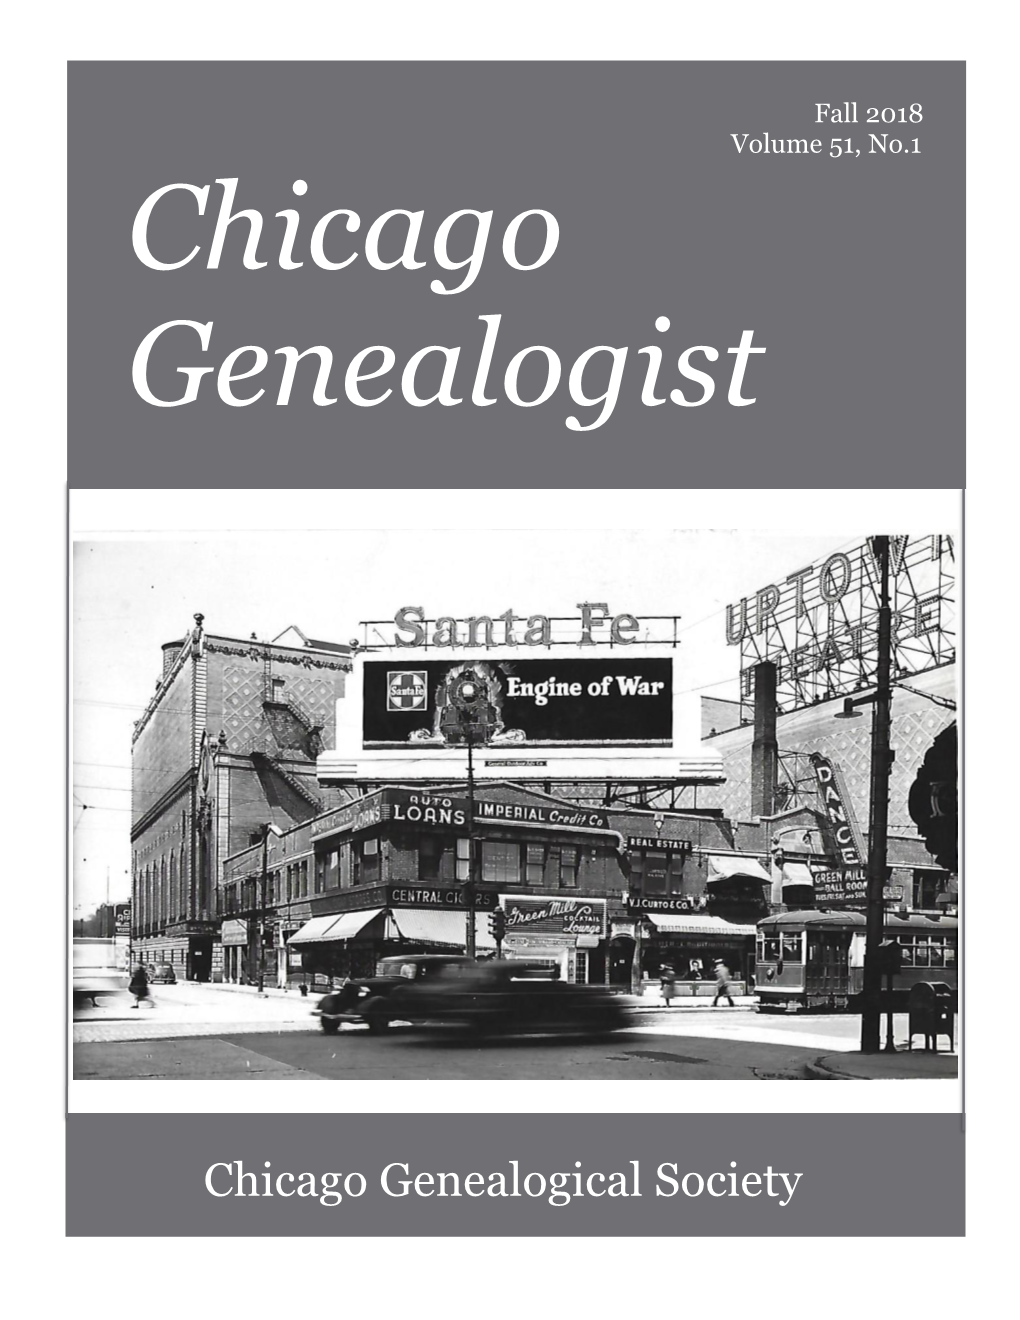 Chicago Genealogical Society